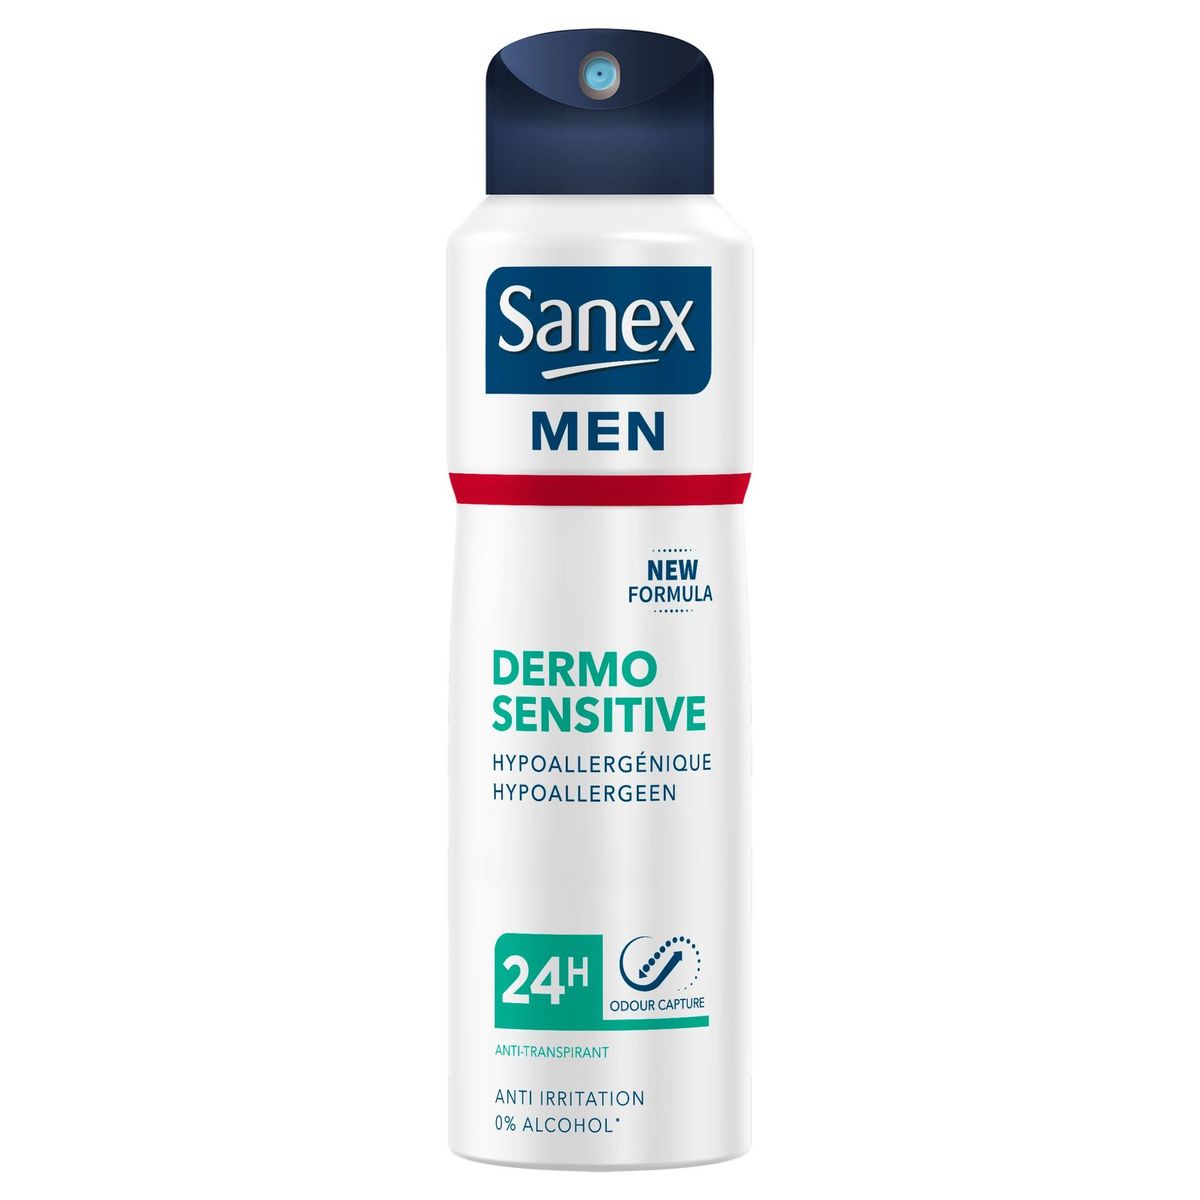 Sanex Men Dermo Sensitive deodorant spray - 200ml